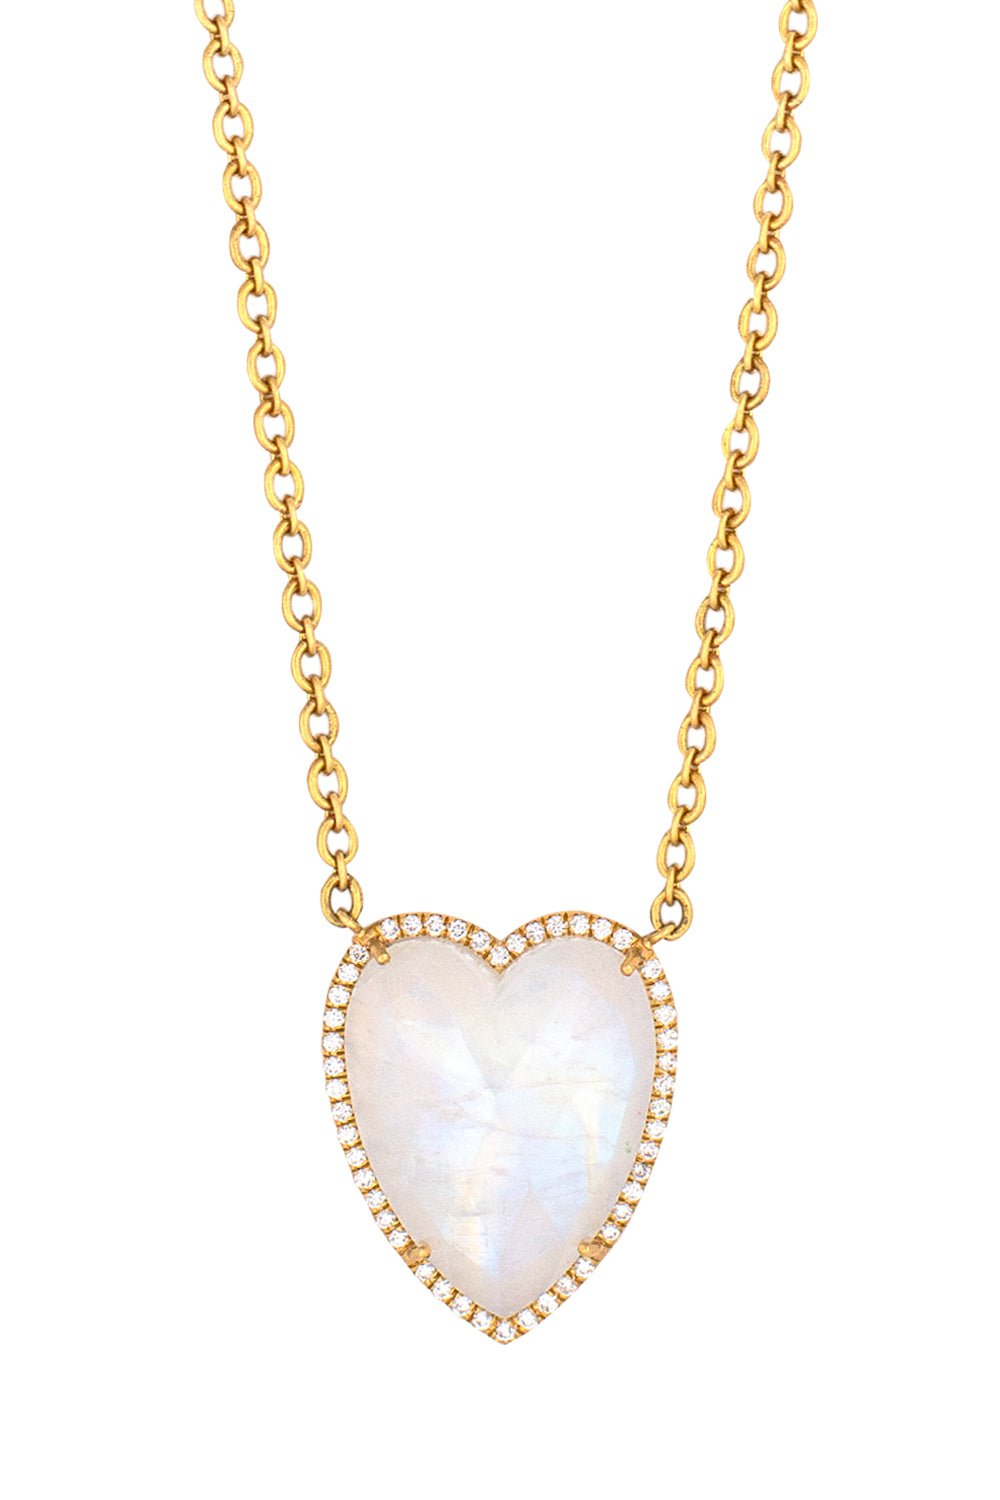 IRENE NEUWIRTH JEWELRY-Moonstone Diamond Heart Necklace-YELLOW GOLD